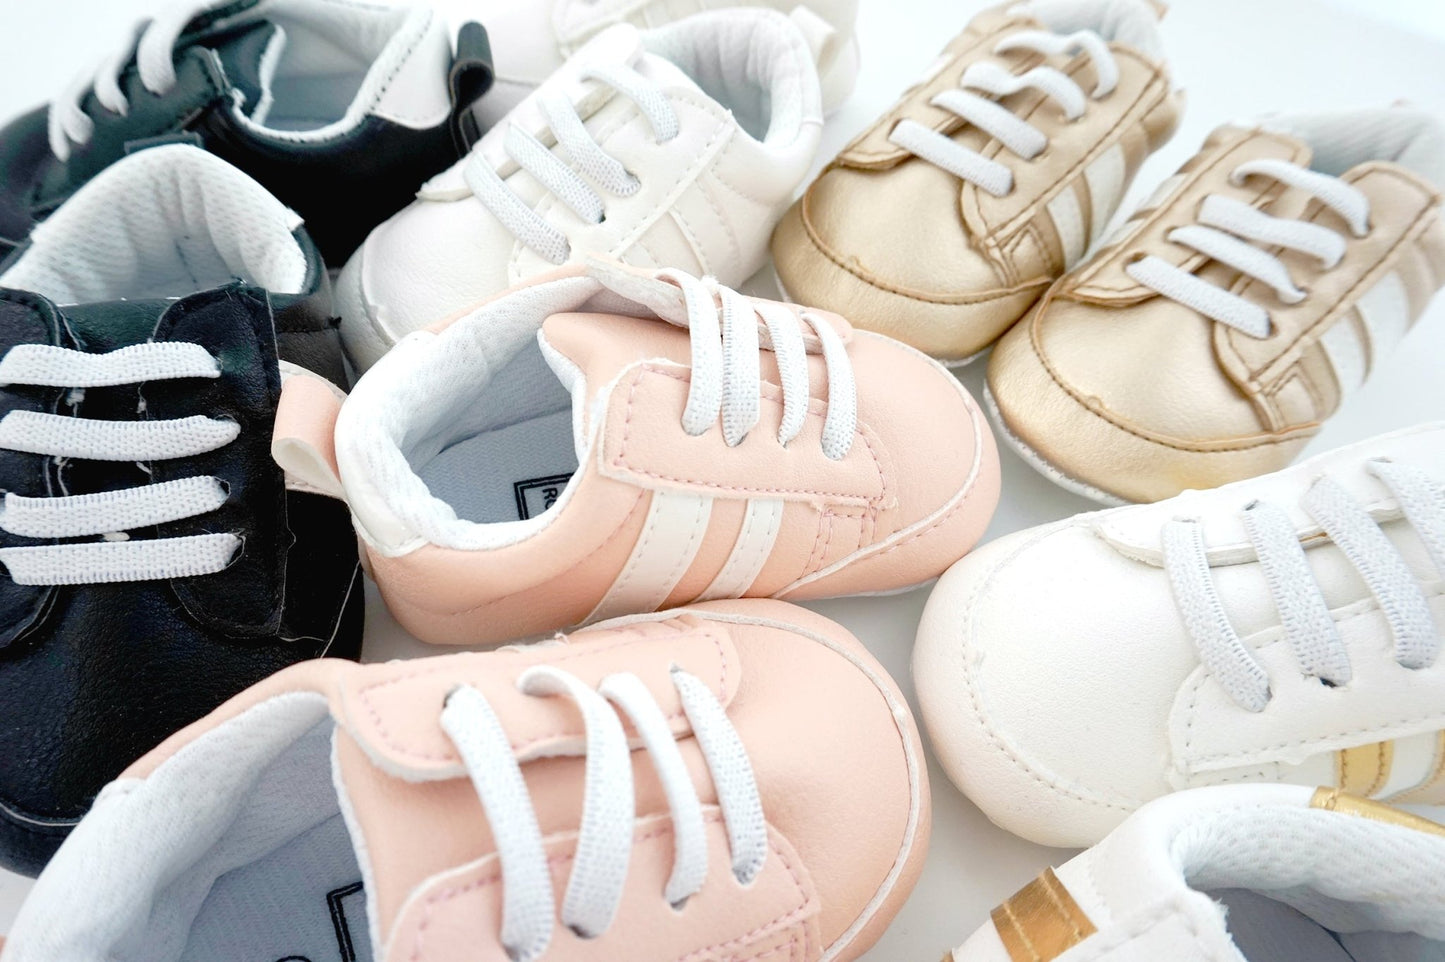 SALE Sneaker Pre-Walker Baby Shoes - Squishy Cheeks